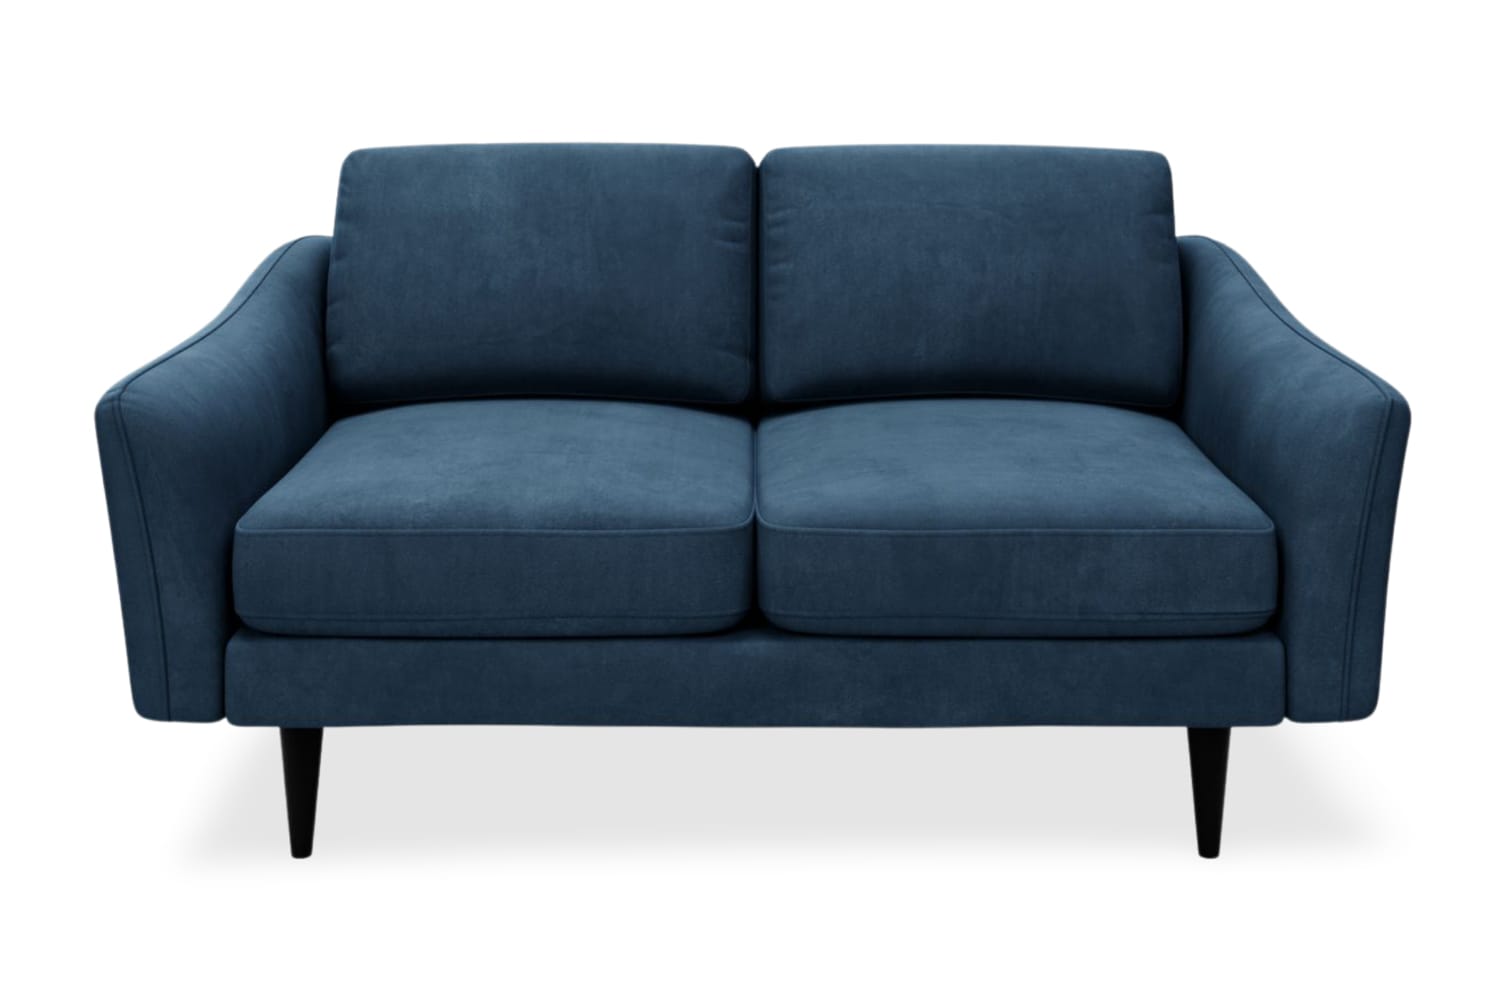 SNUG | The Rebel 2 Seater Sofa in Blue Steel variant_40414889279536